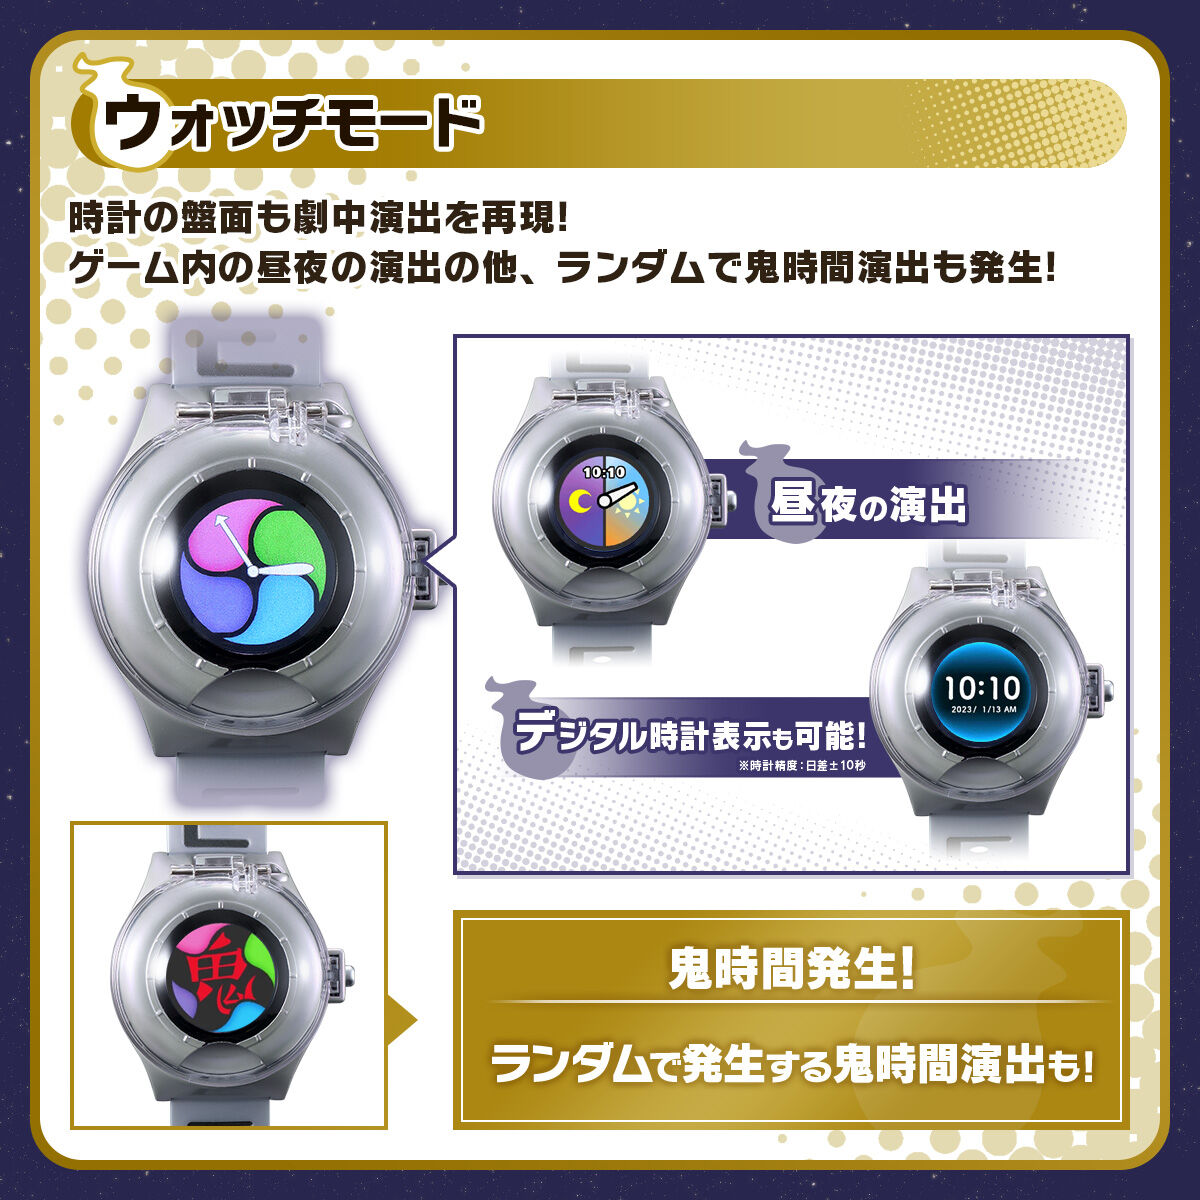 Yo-Kai Watch 10th Anniversary Edition